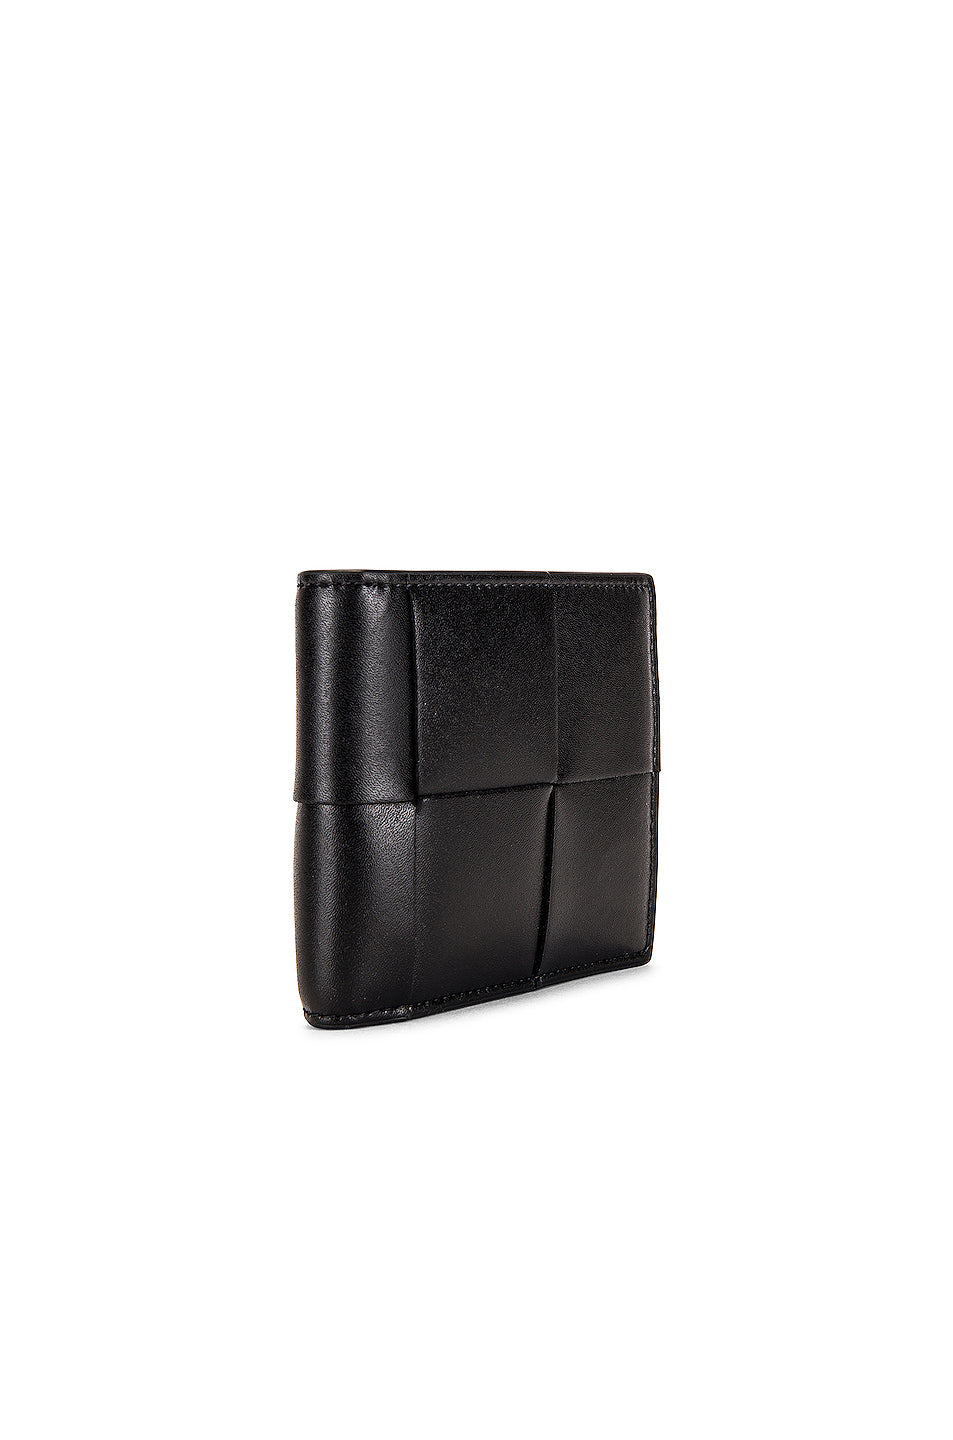 Urban Leather Billfold Wallet